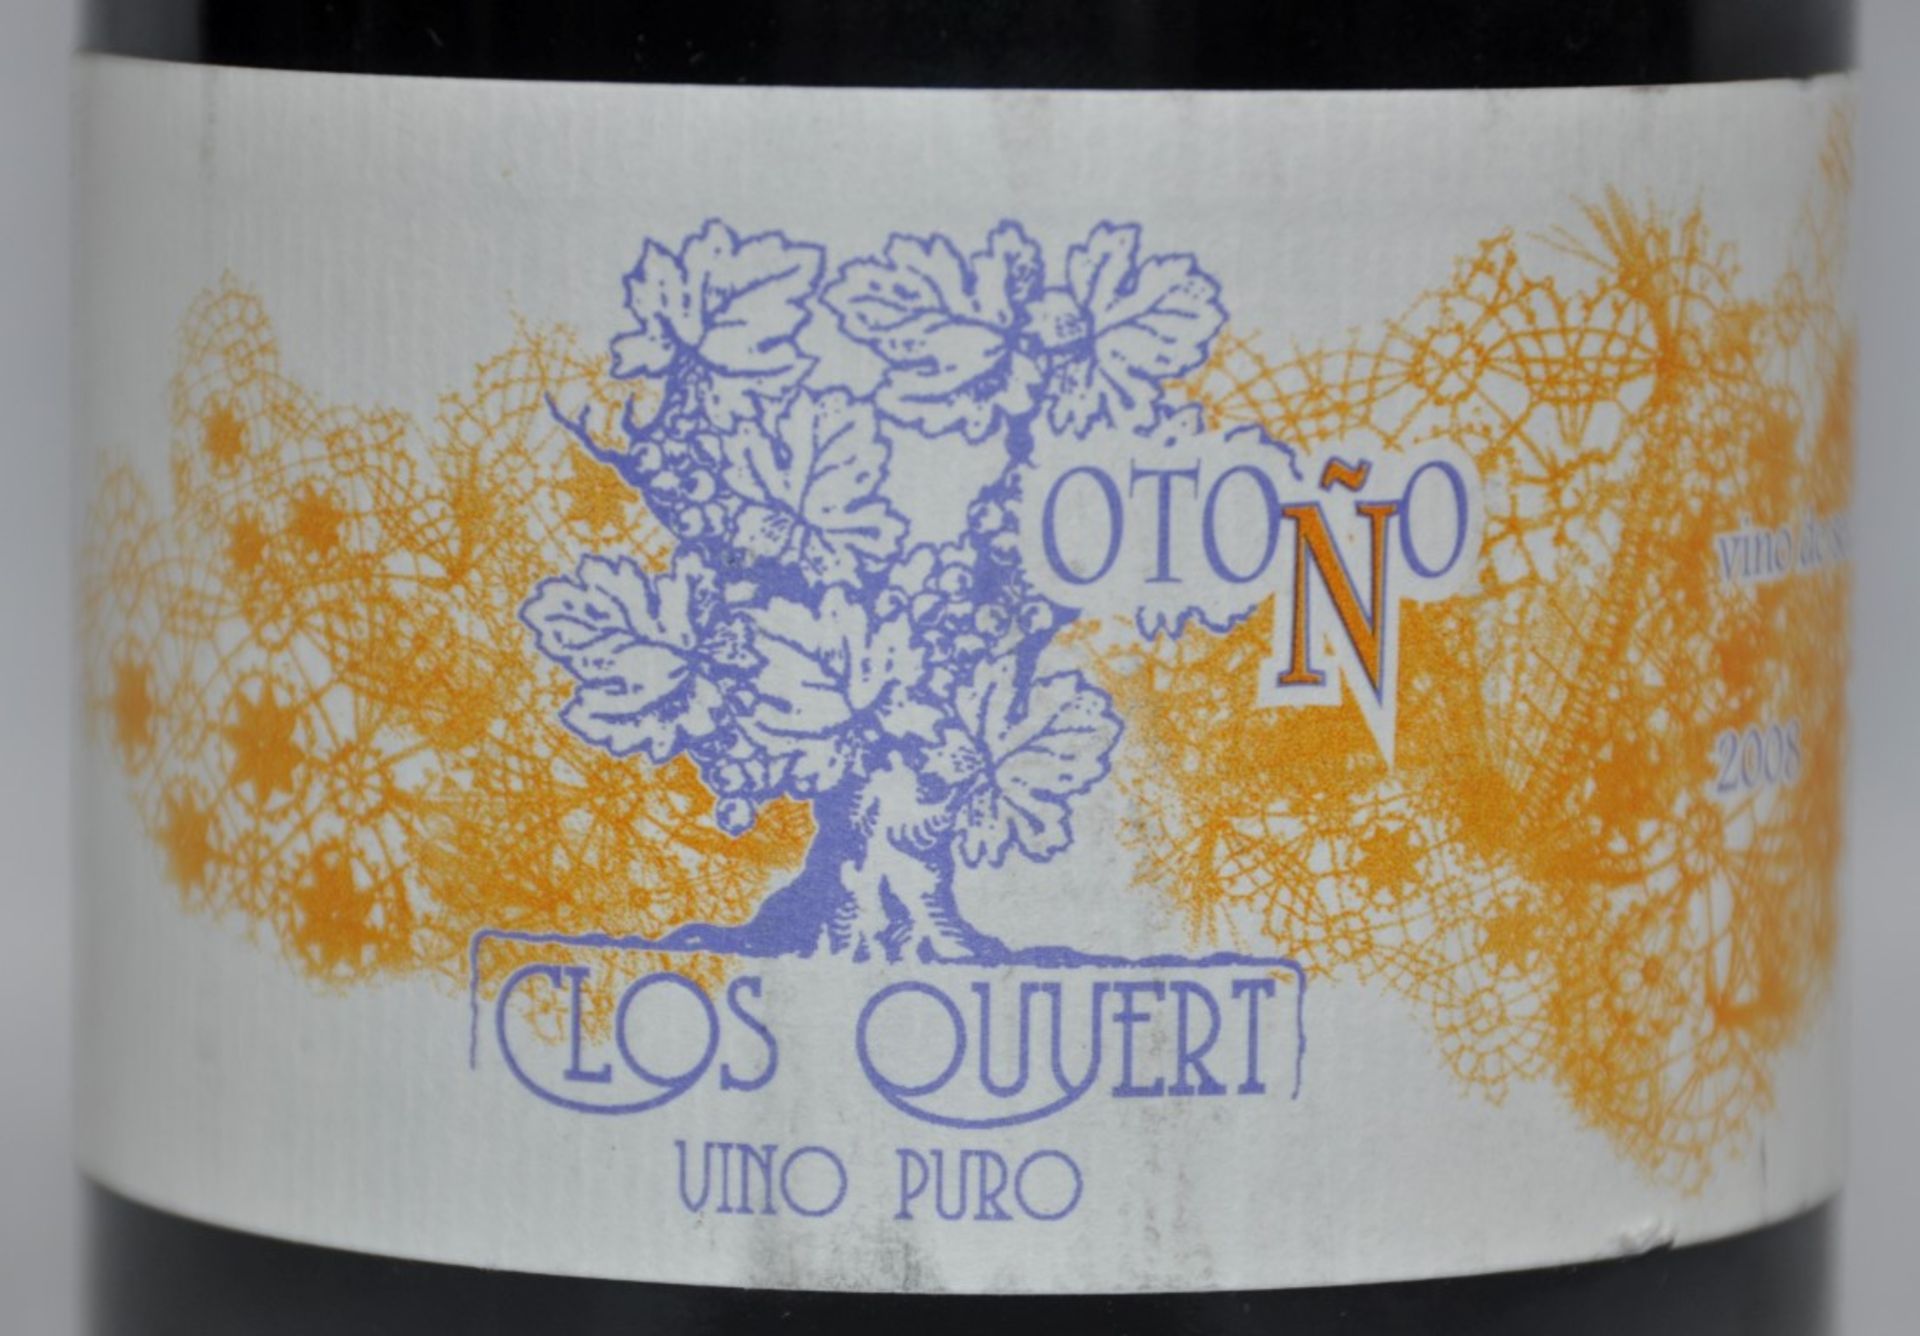 1 x Otono Clos Quyert Vino Puro Red Wine - French Wine - Year 2008 - Bottle Size 75cl - Volume 14.5% - Image 3 of 3